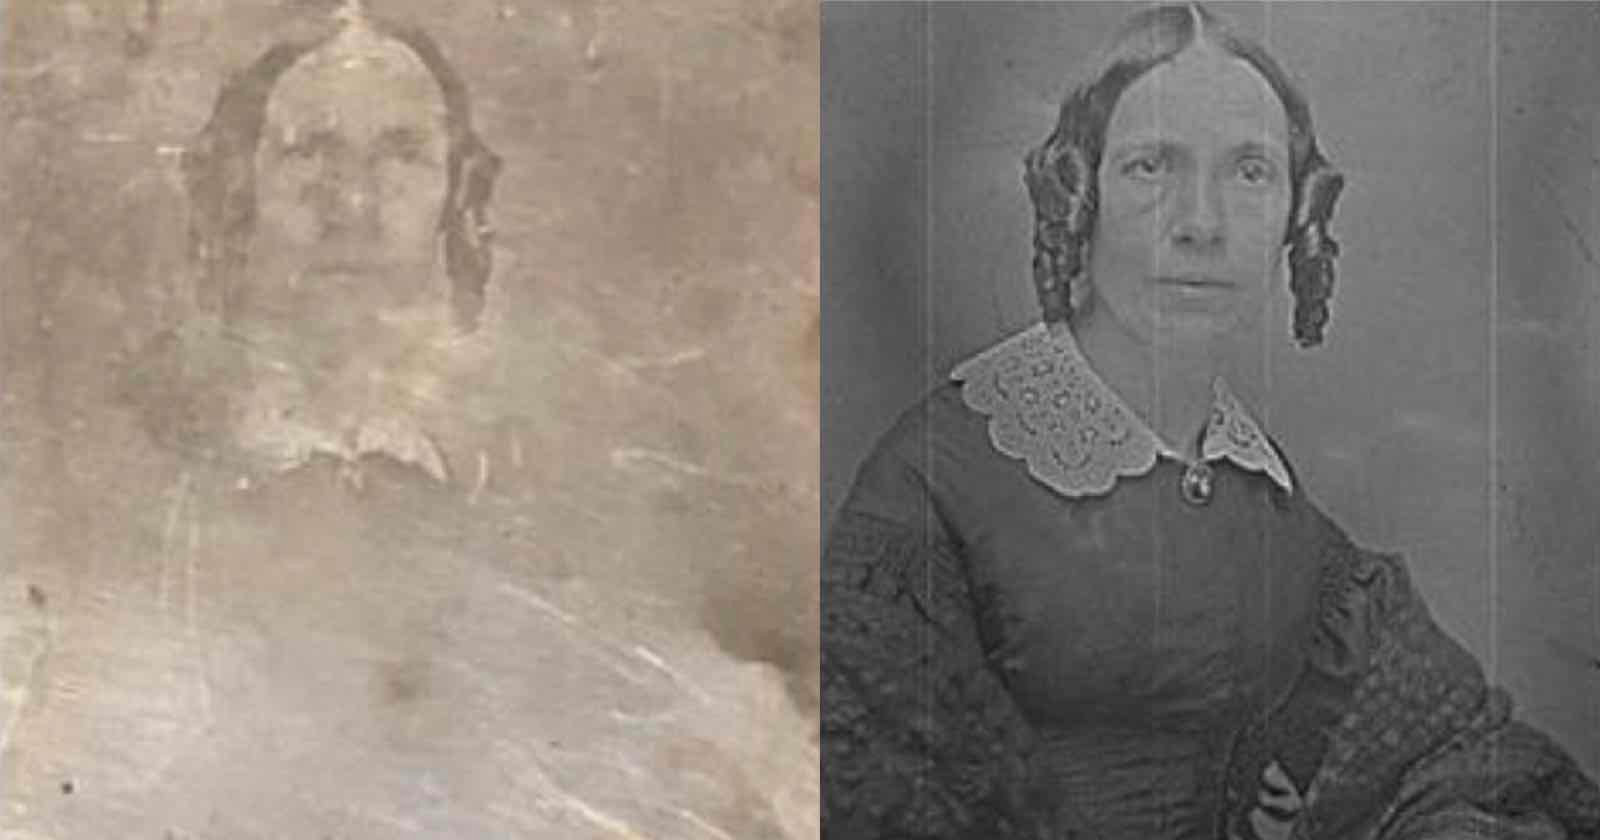  scientists develop technique recovering old daguerreotype photos 